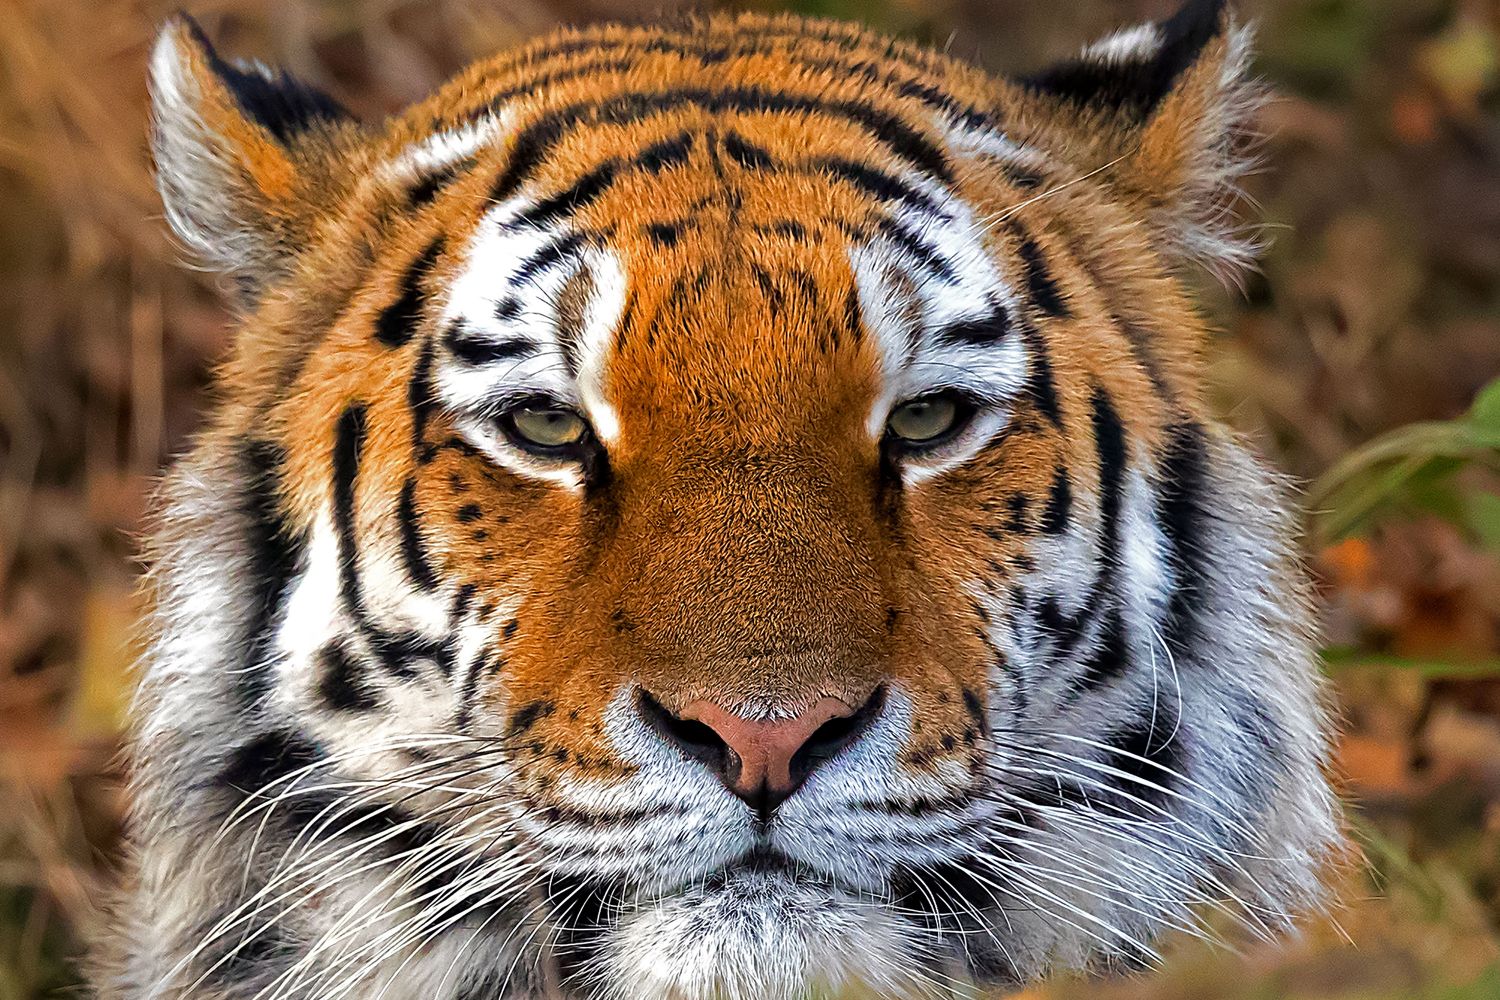 Tiger Tiger Burning Bright - by Wildlife Photographer Martin Lawrence